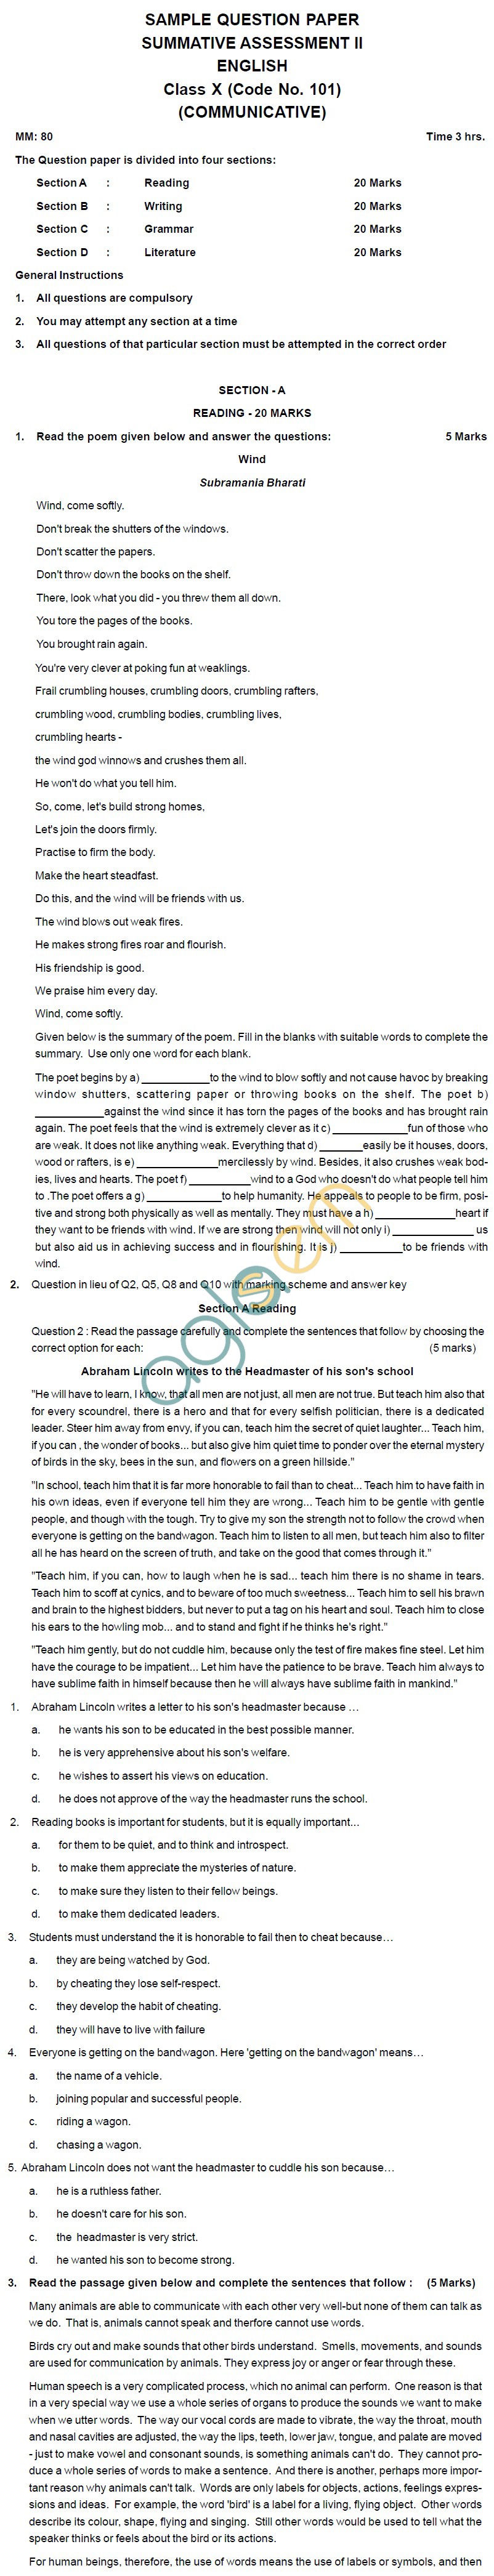 CBSE Board Exam 2013 Sample Papers (SA2) Class X - English Communicative